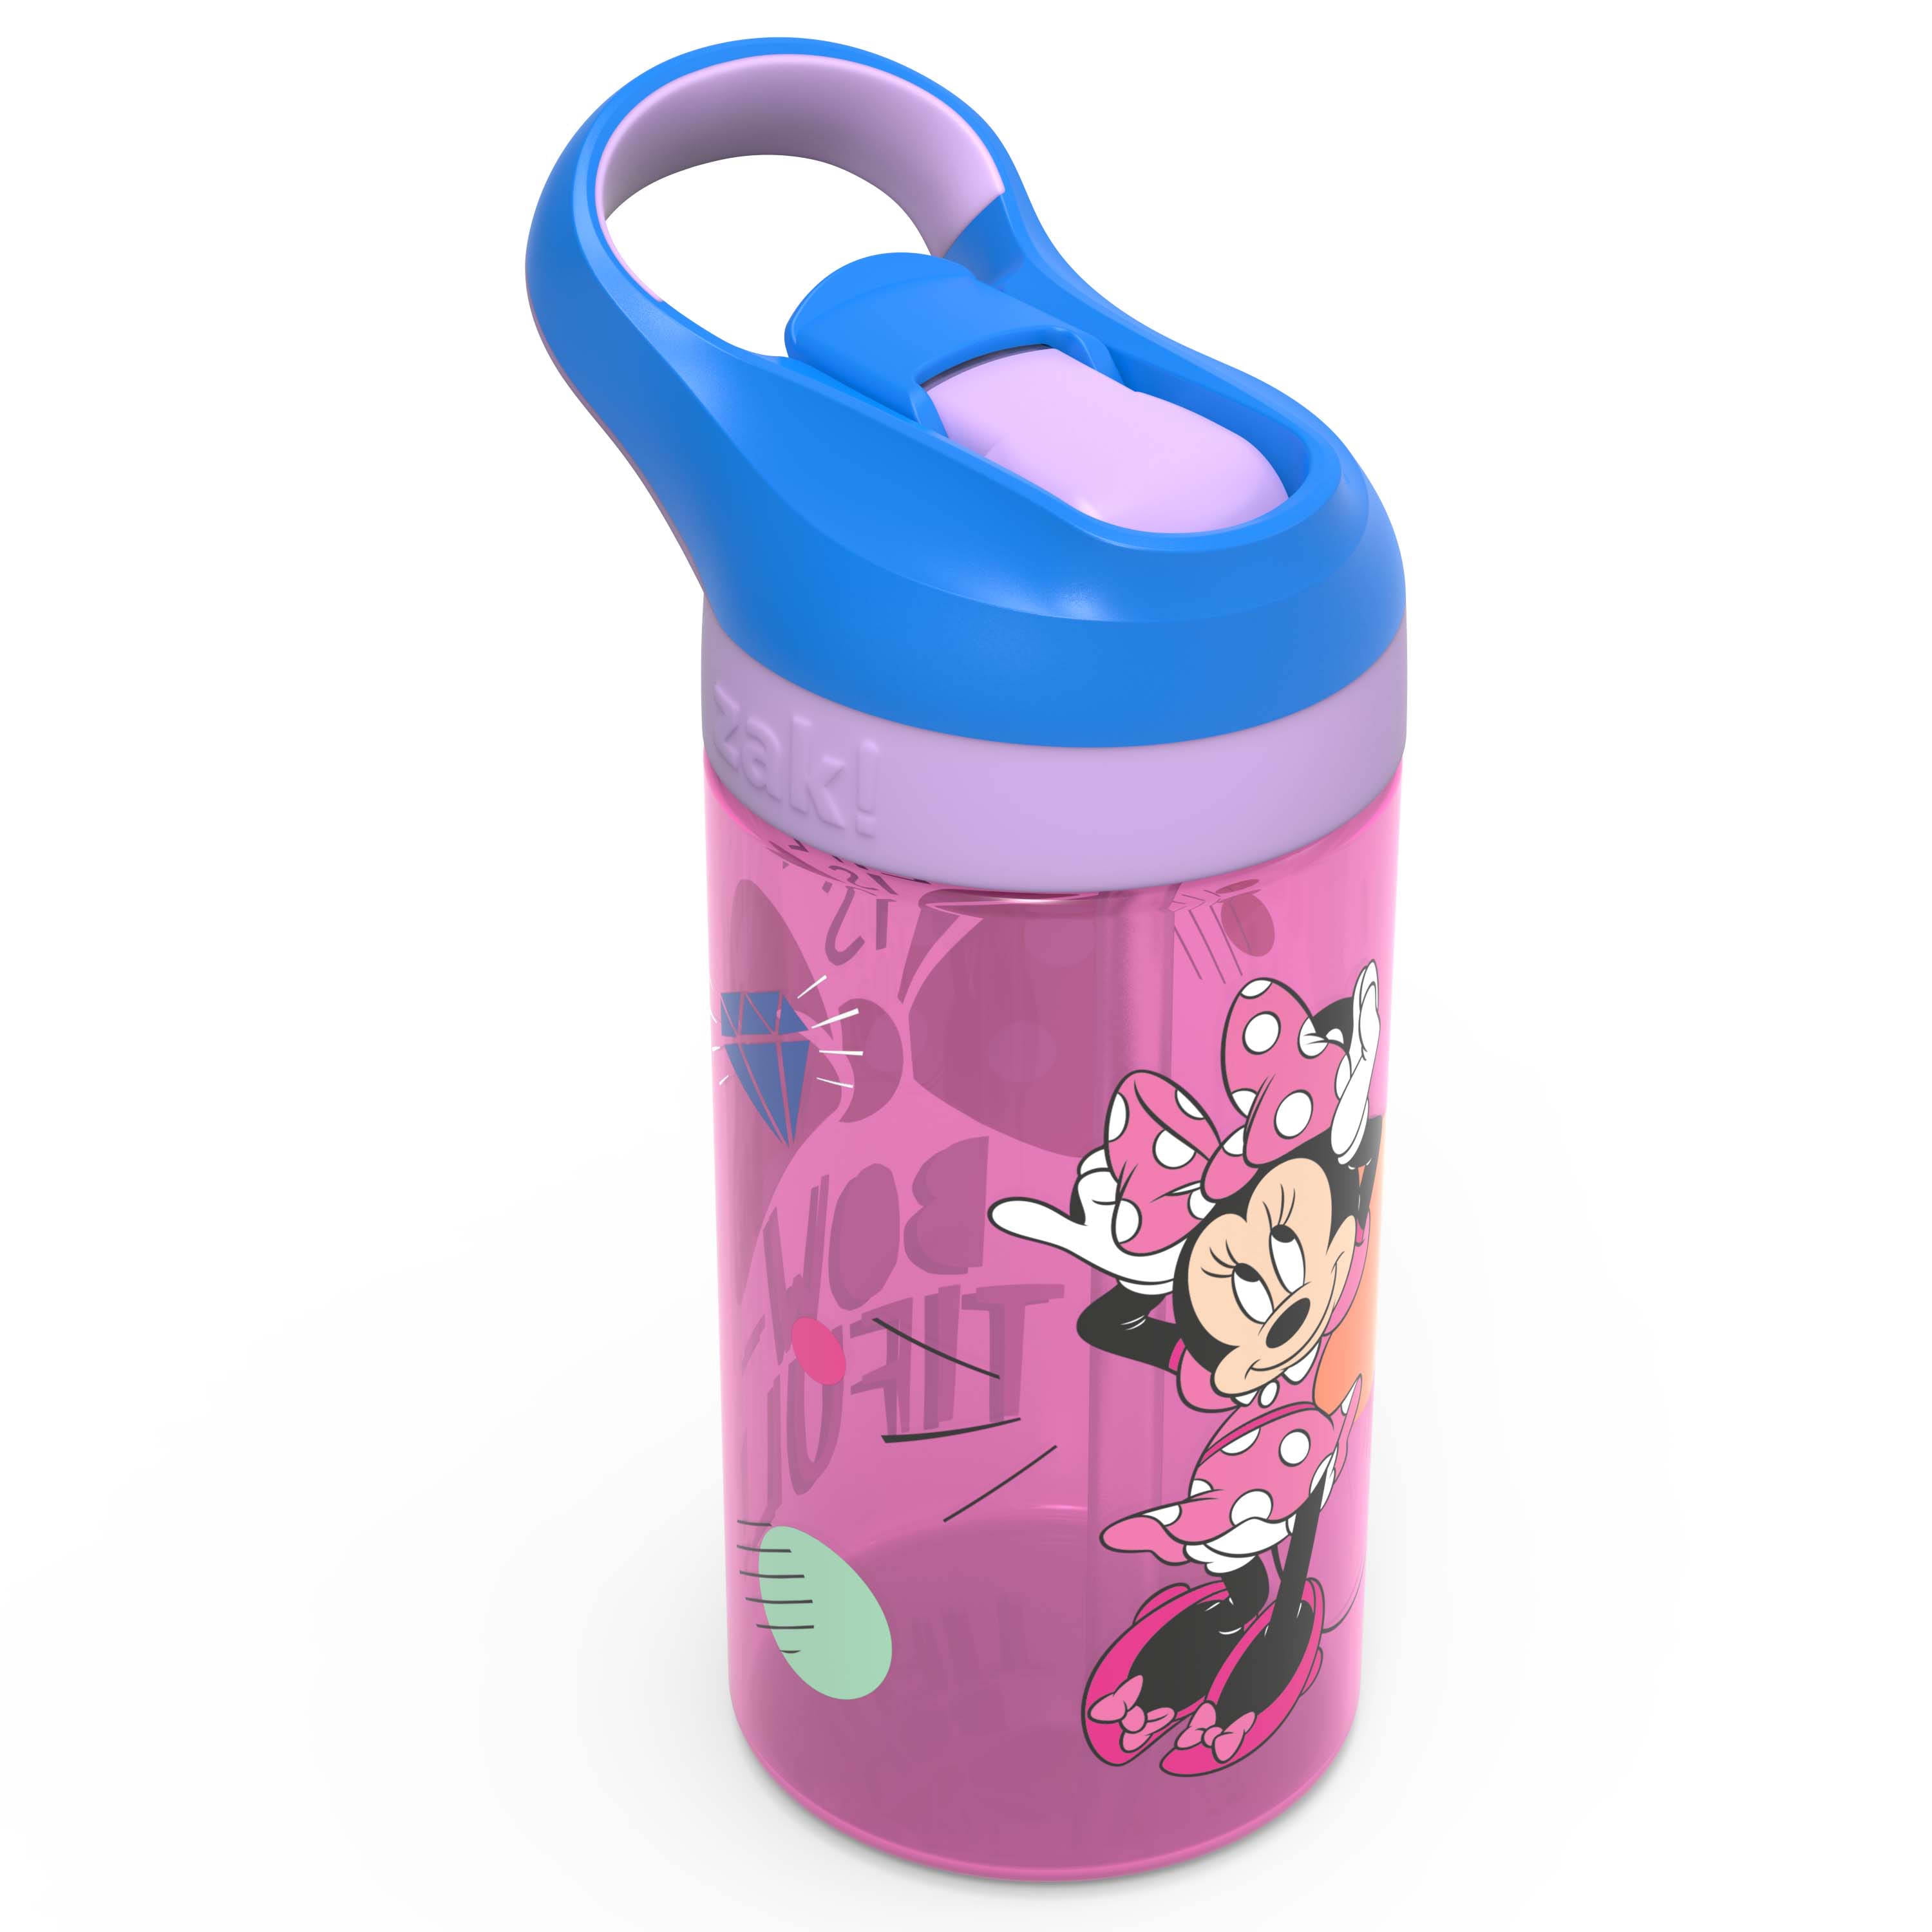 Simple Modern Kids Disney Water Bottle 2-Pack 16-oz Minnie Mouse